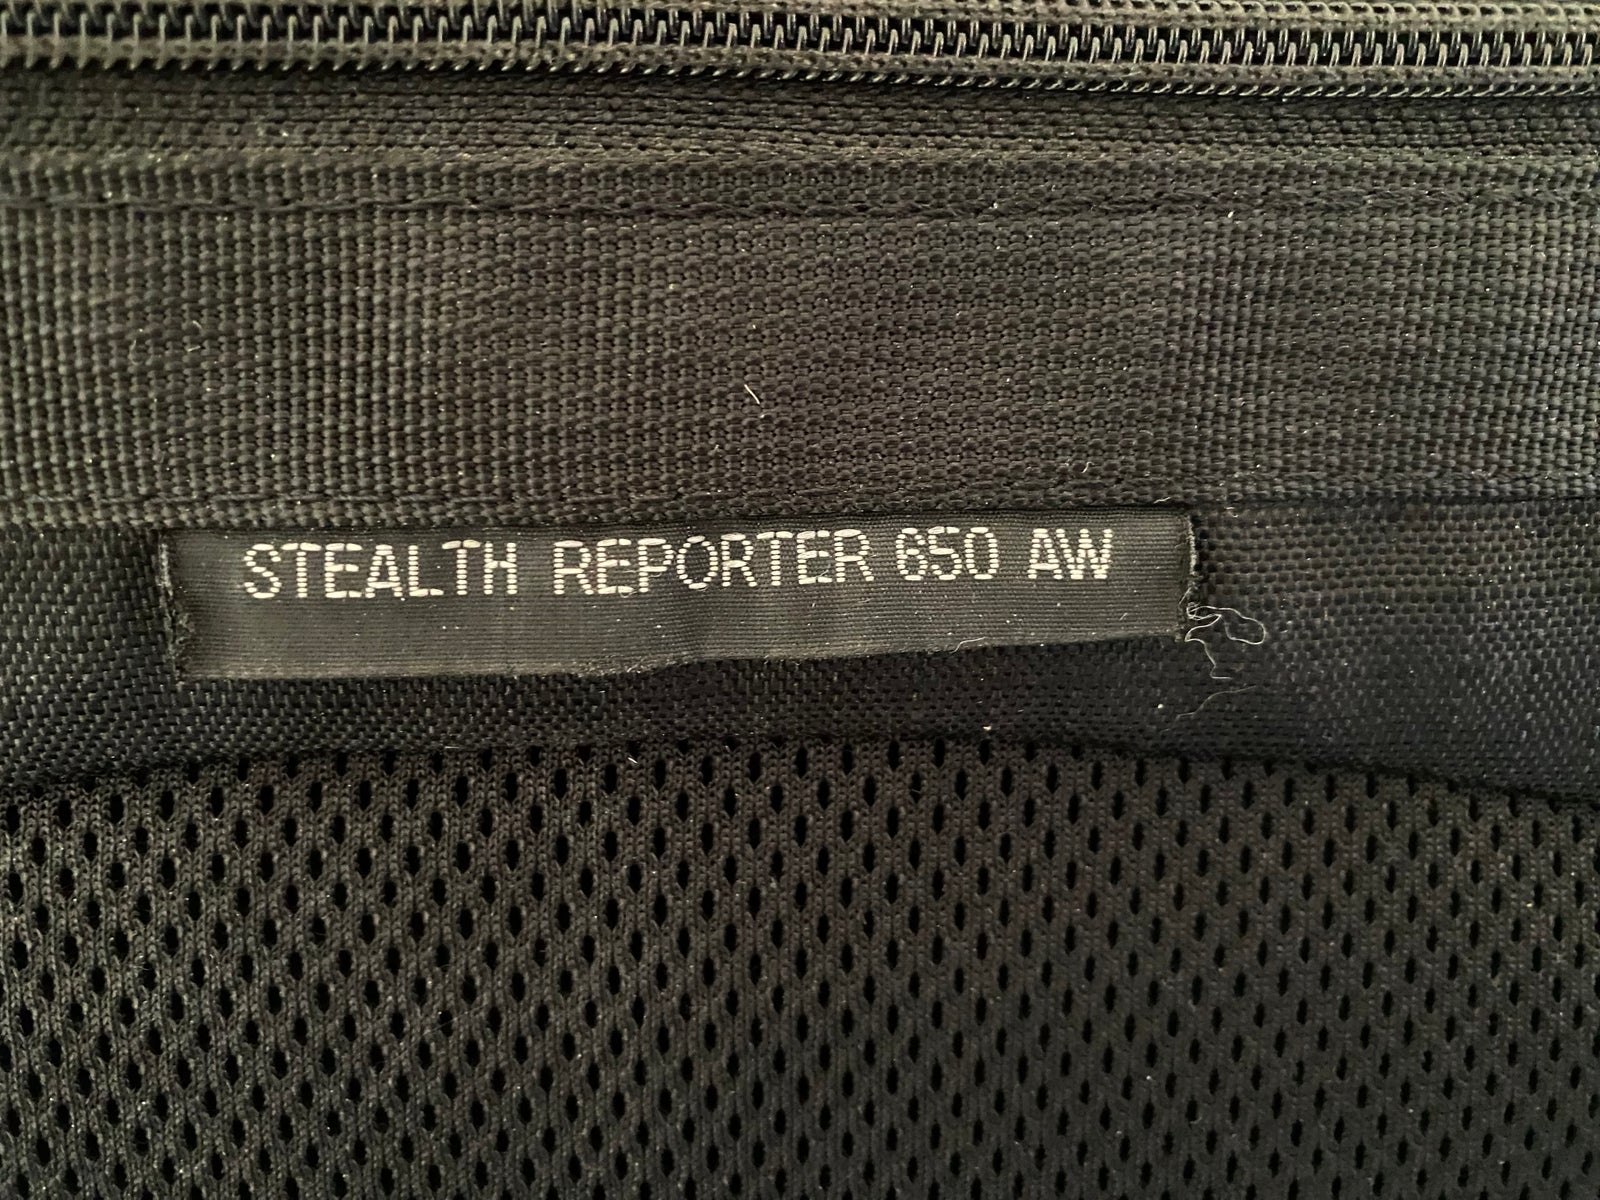 Fototaske, Lowepro, Stealth reporter 650AW